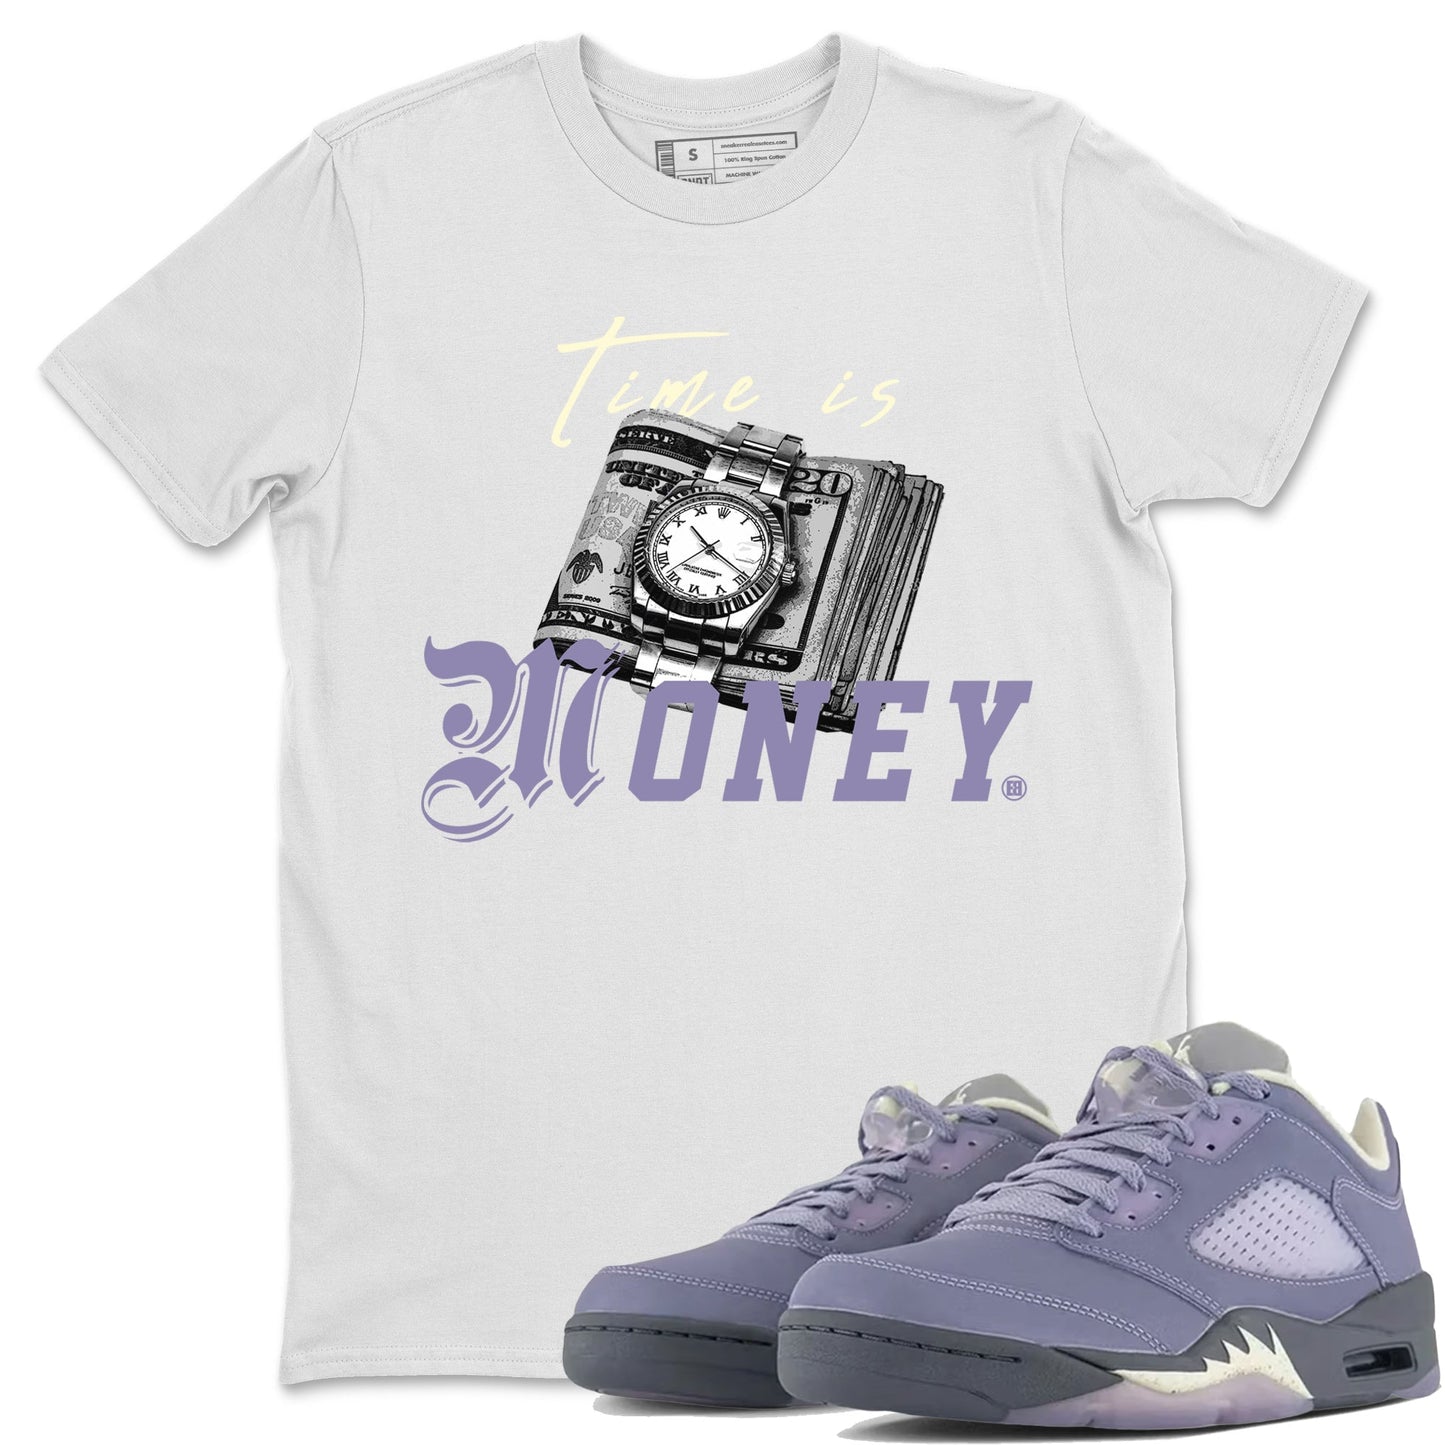 5s Indigo Haze Sneaker Match Tees Time Is Money Sneaker T-Shirt Air Jordan 5 Indigo Haze Sneaker Release Tees Unisex Shirts White 1